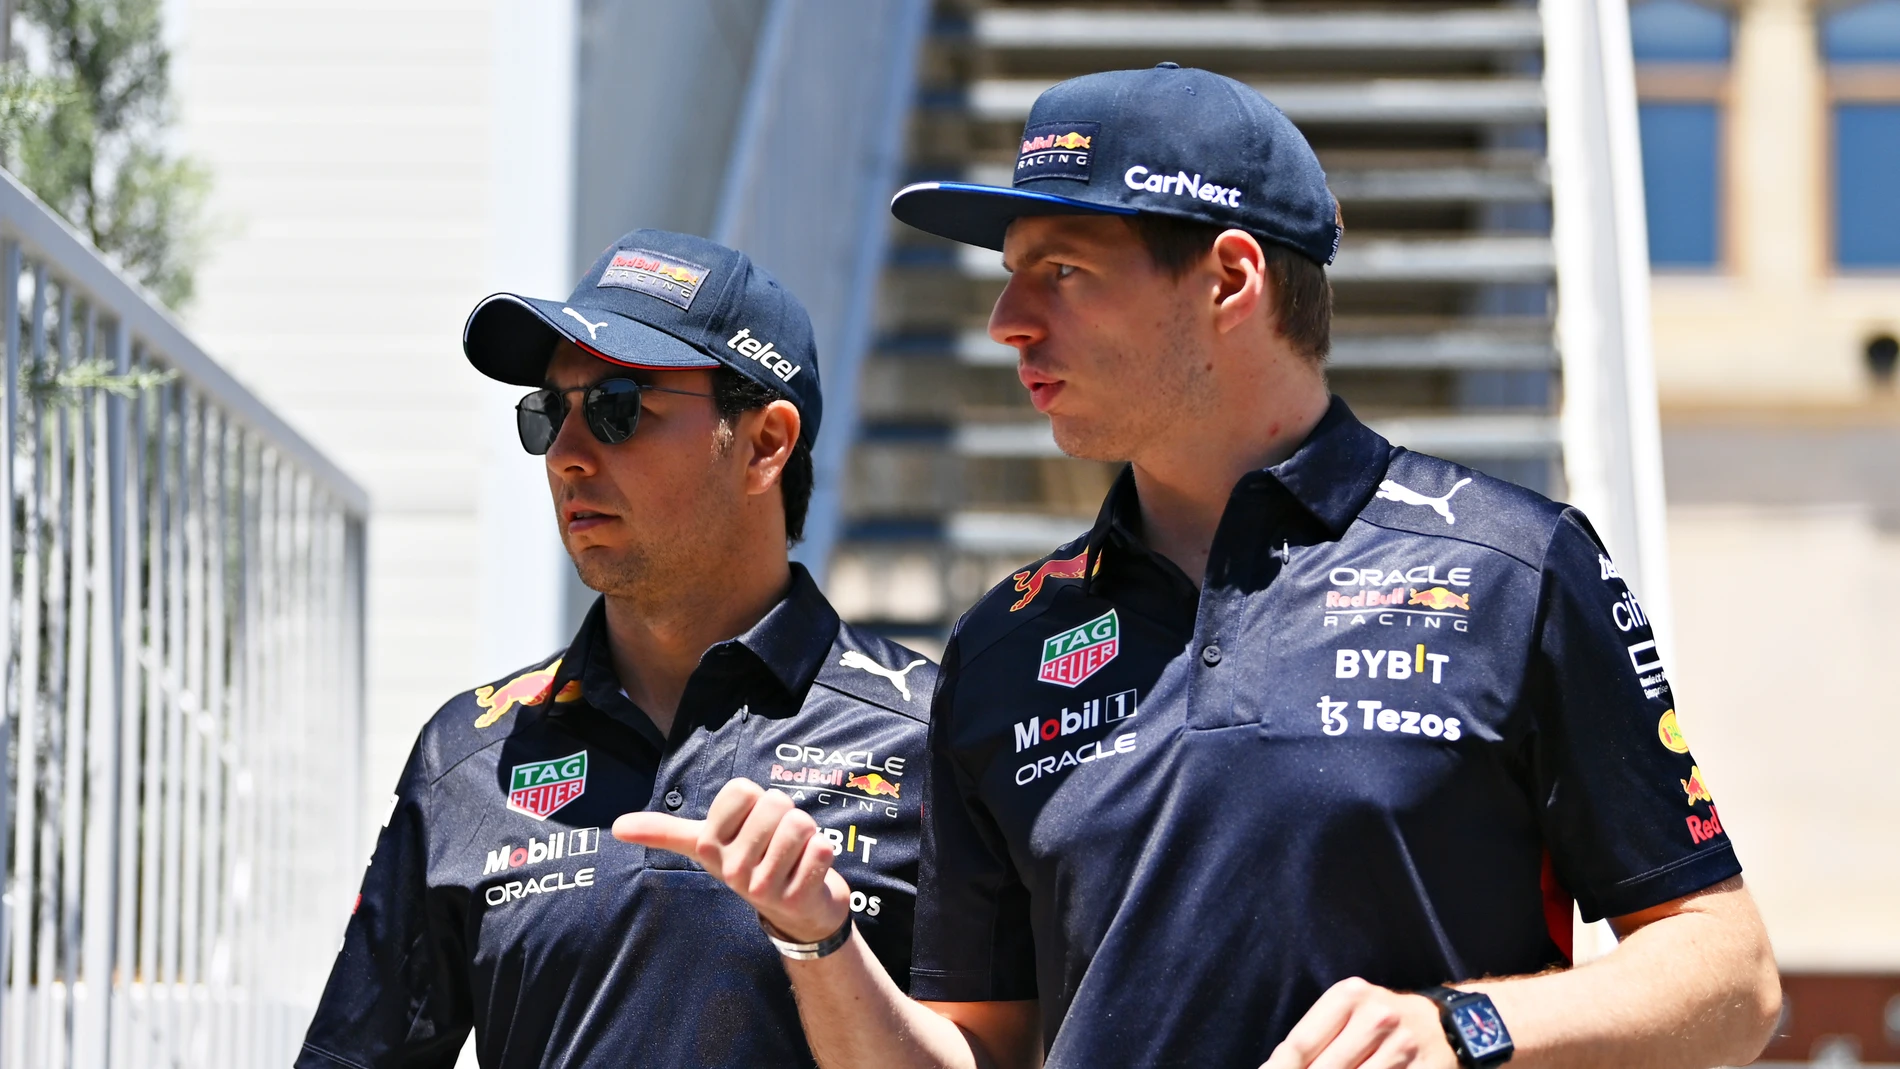 Sergio Pérez y Max Verstappen